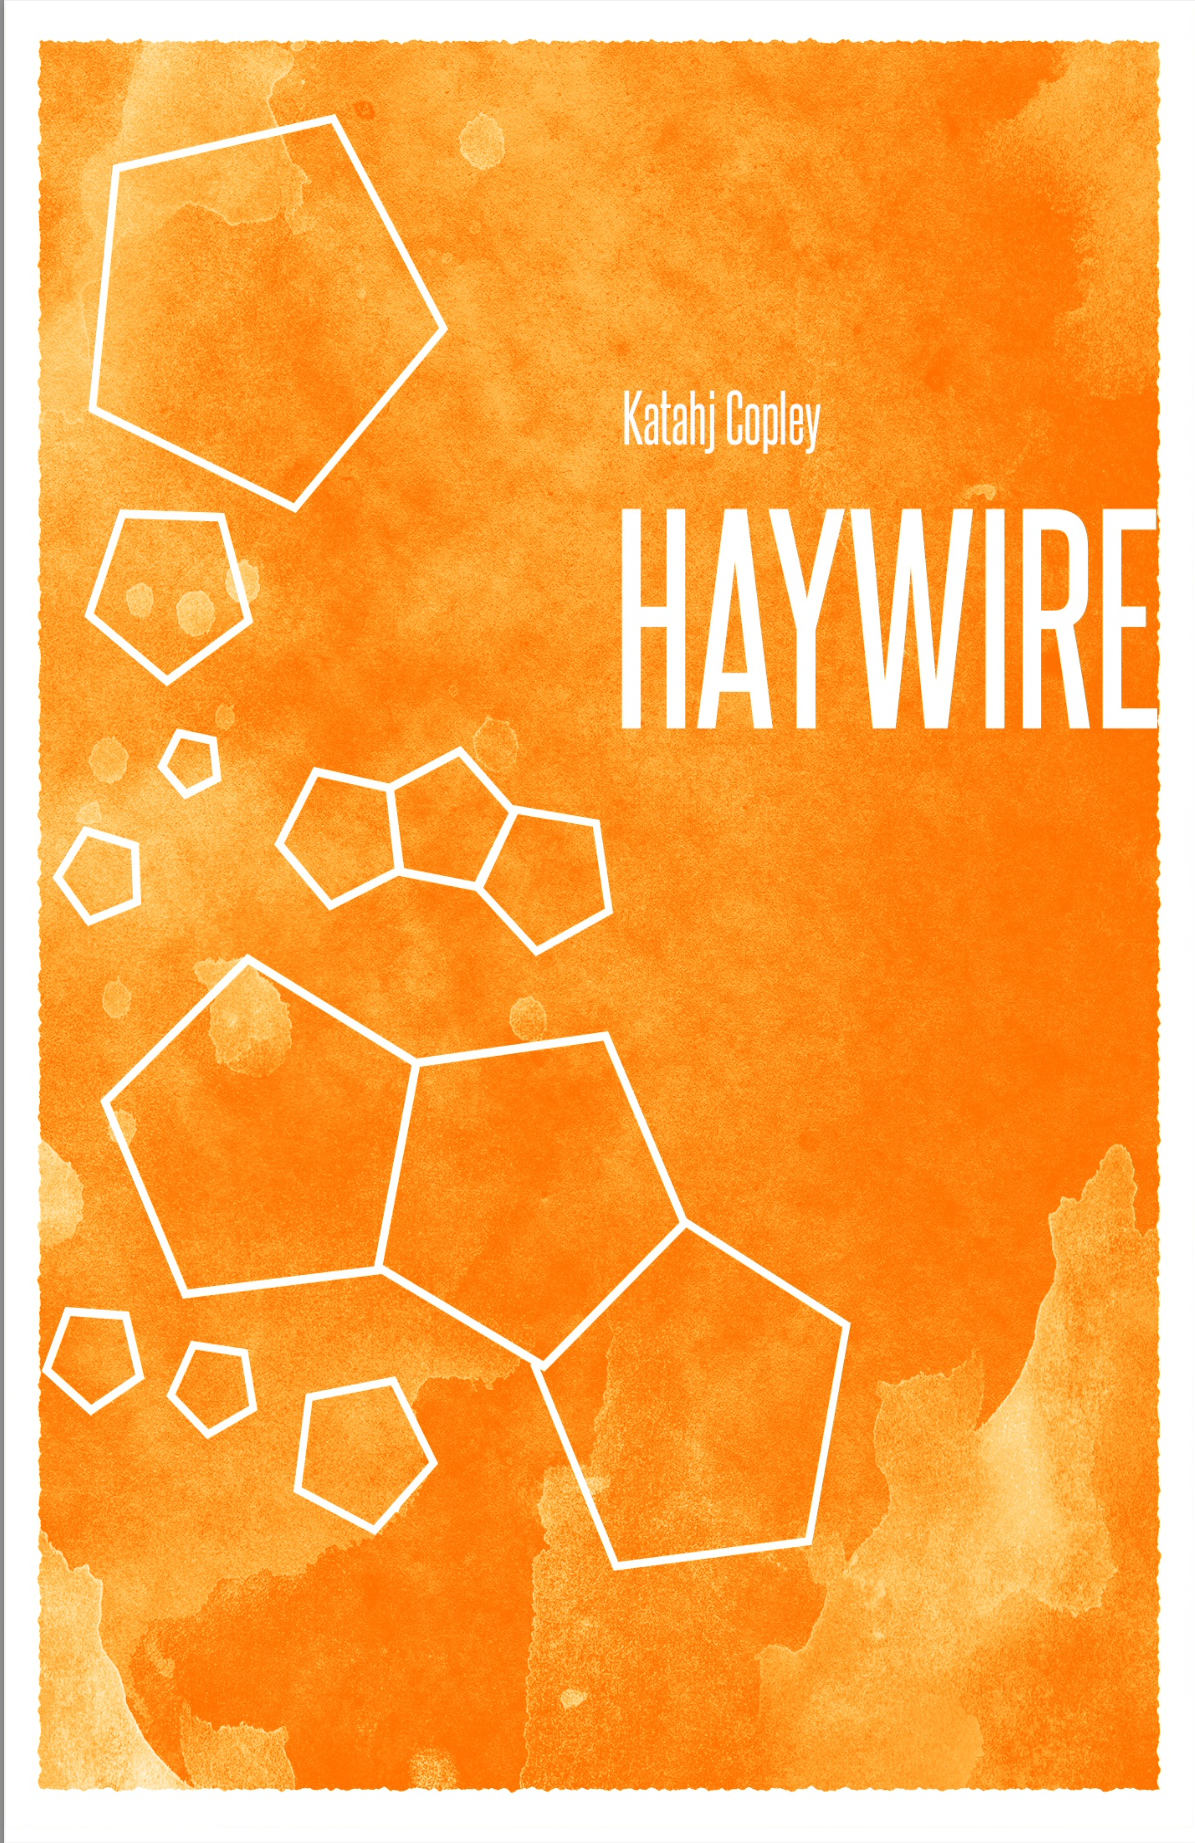 Haywire by Katahj Copley